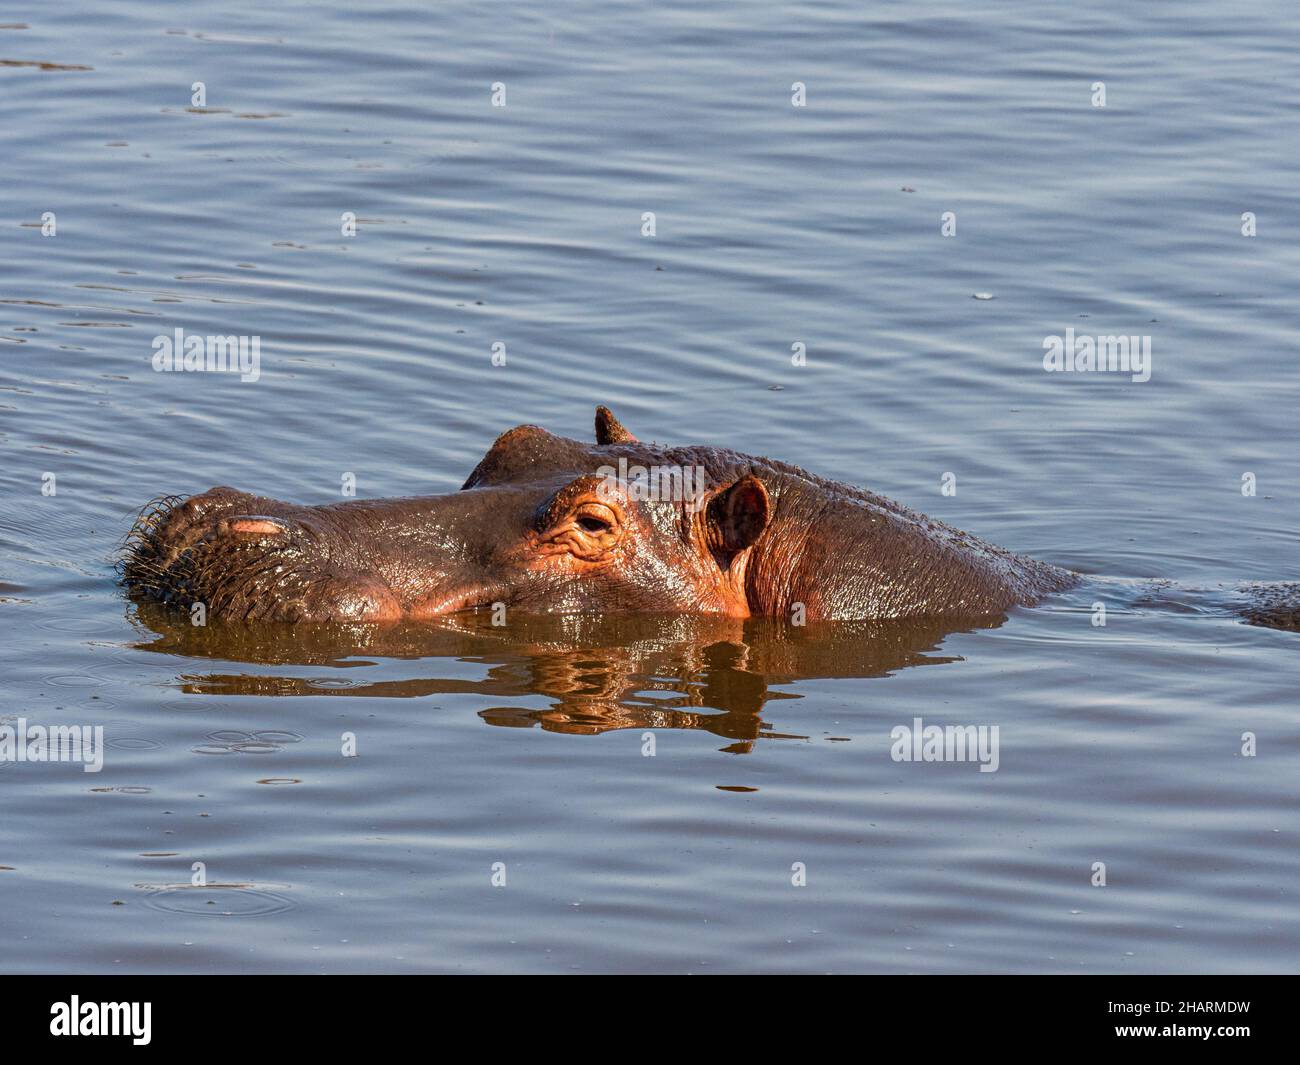 Hipopotamus in SERENGETI Park Stock Photo